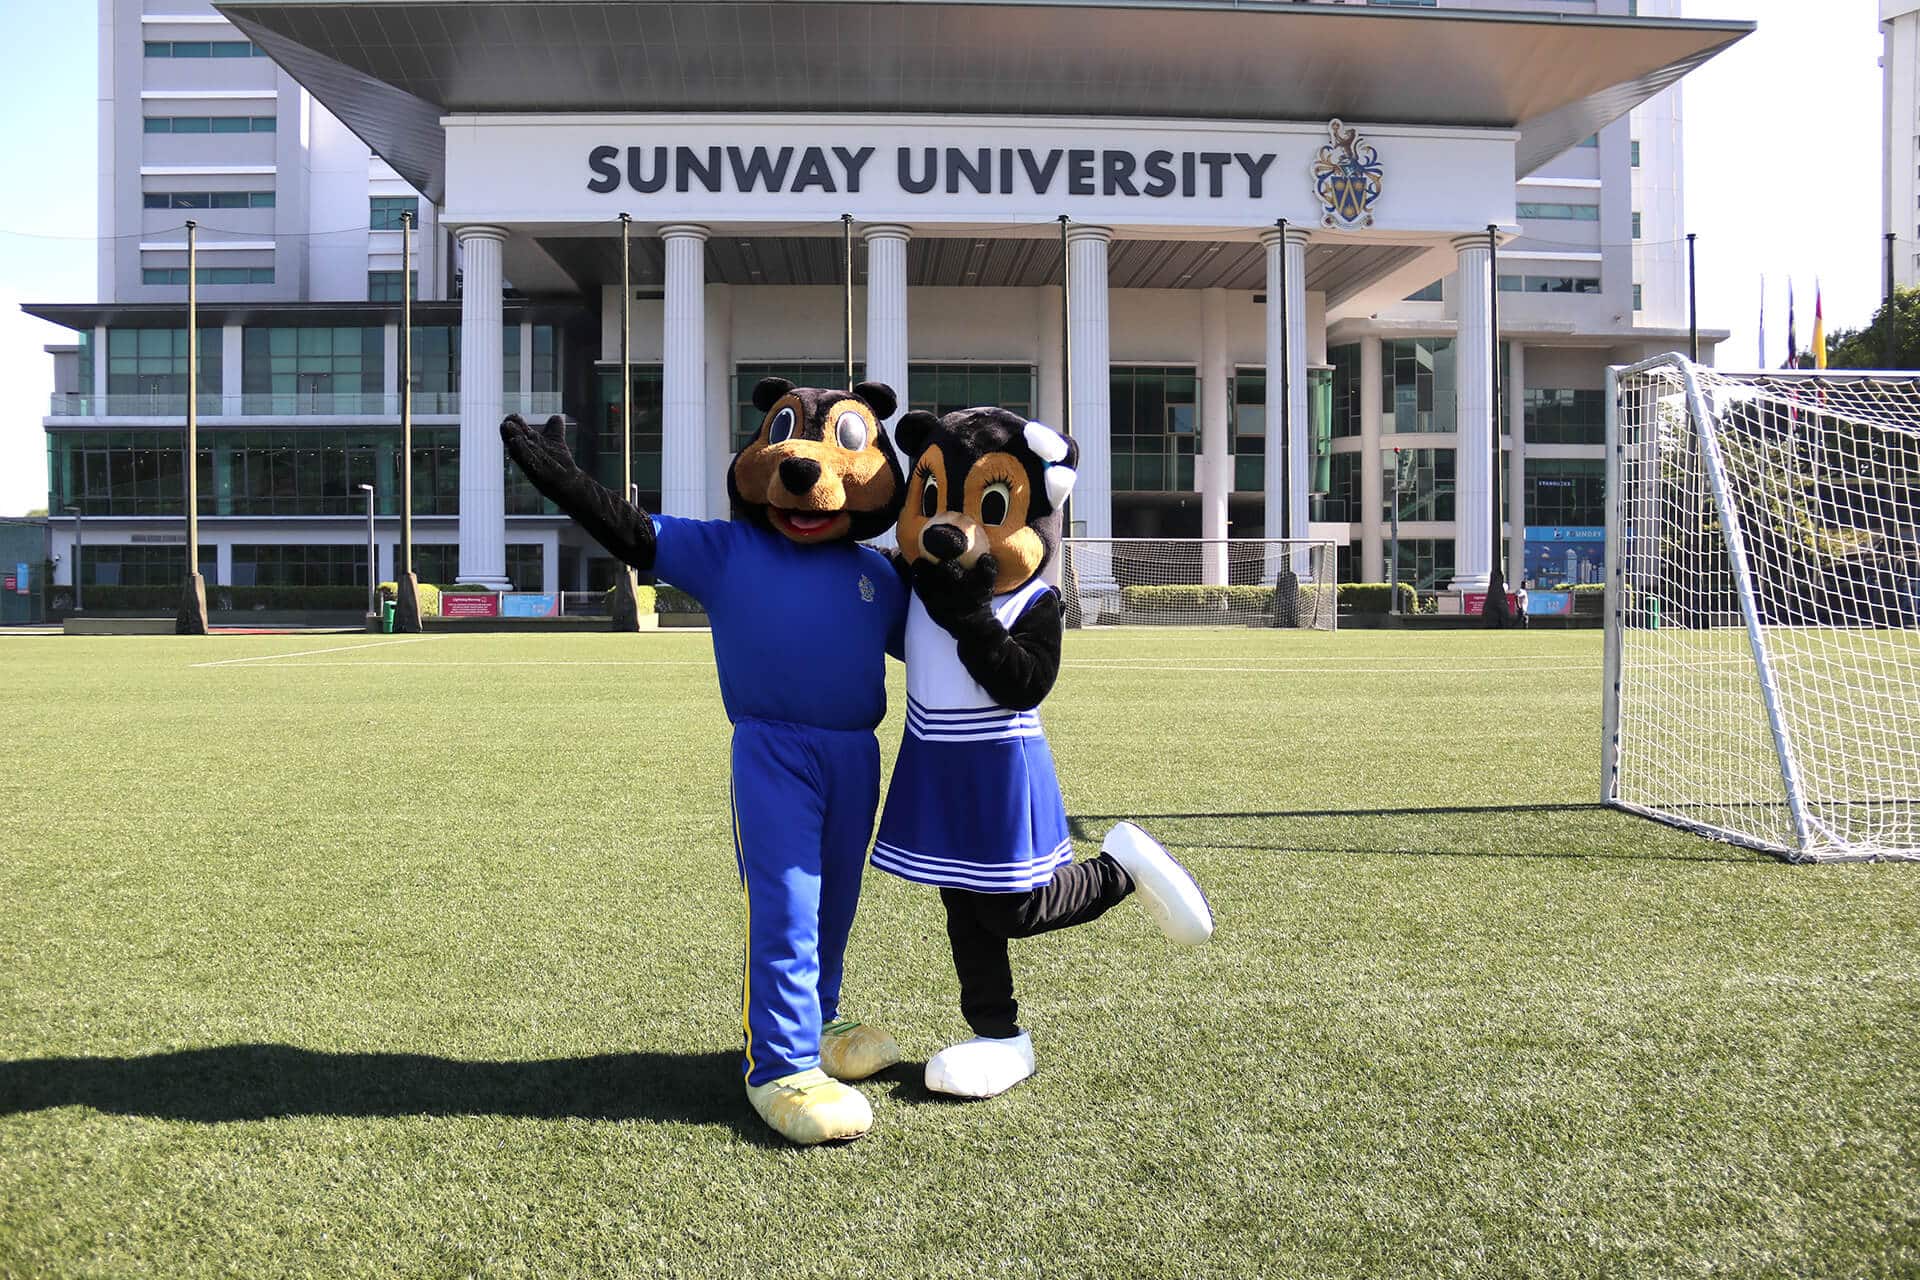 Take a paw-se and enjoy campus-cruising with Samson and Sophia at Sunway University